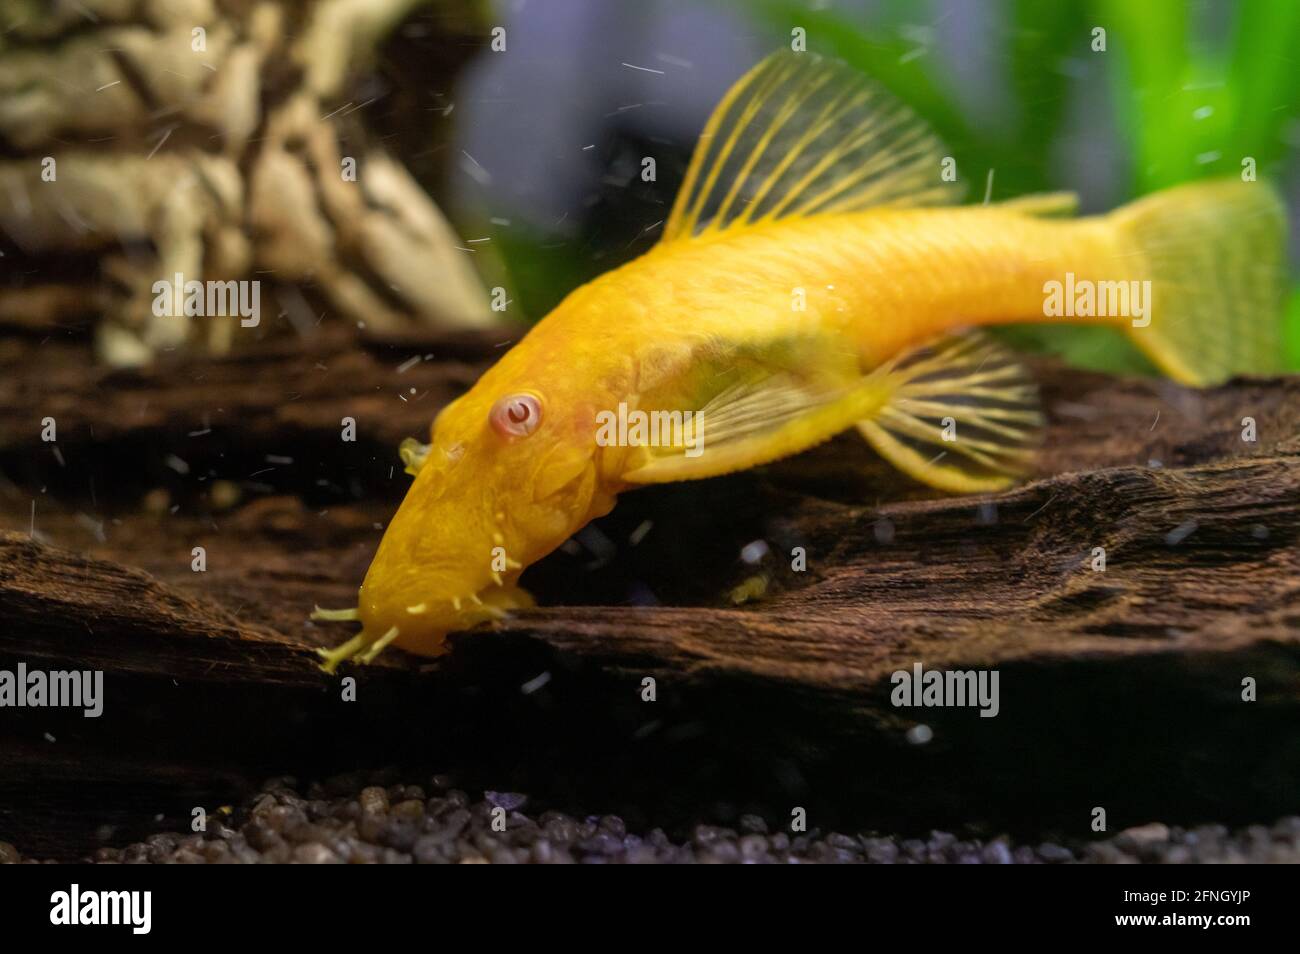 Closeup shot of a beautiful Ancistrus Gold fish swimming underwater Stock Photo